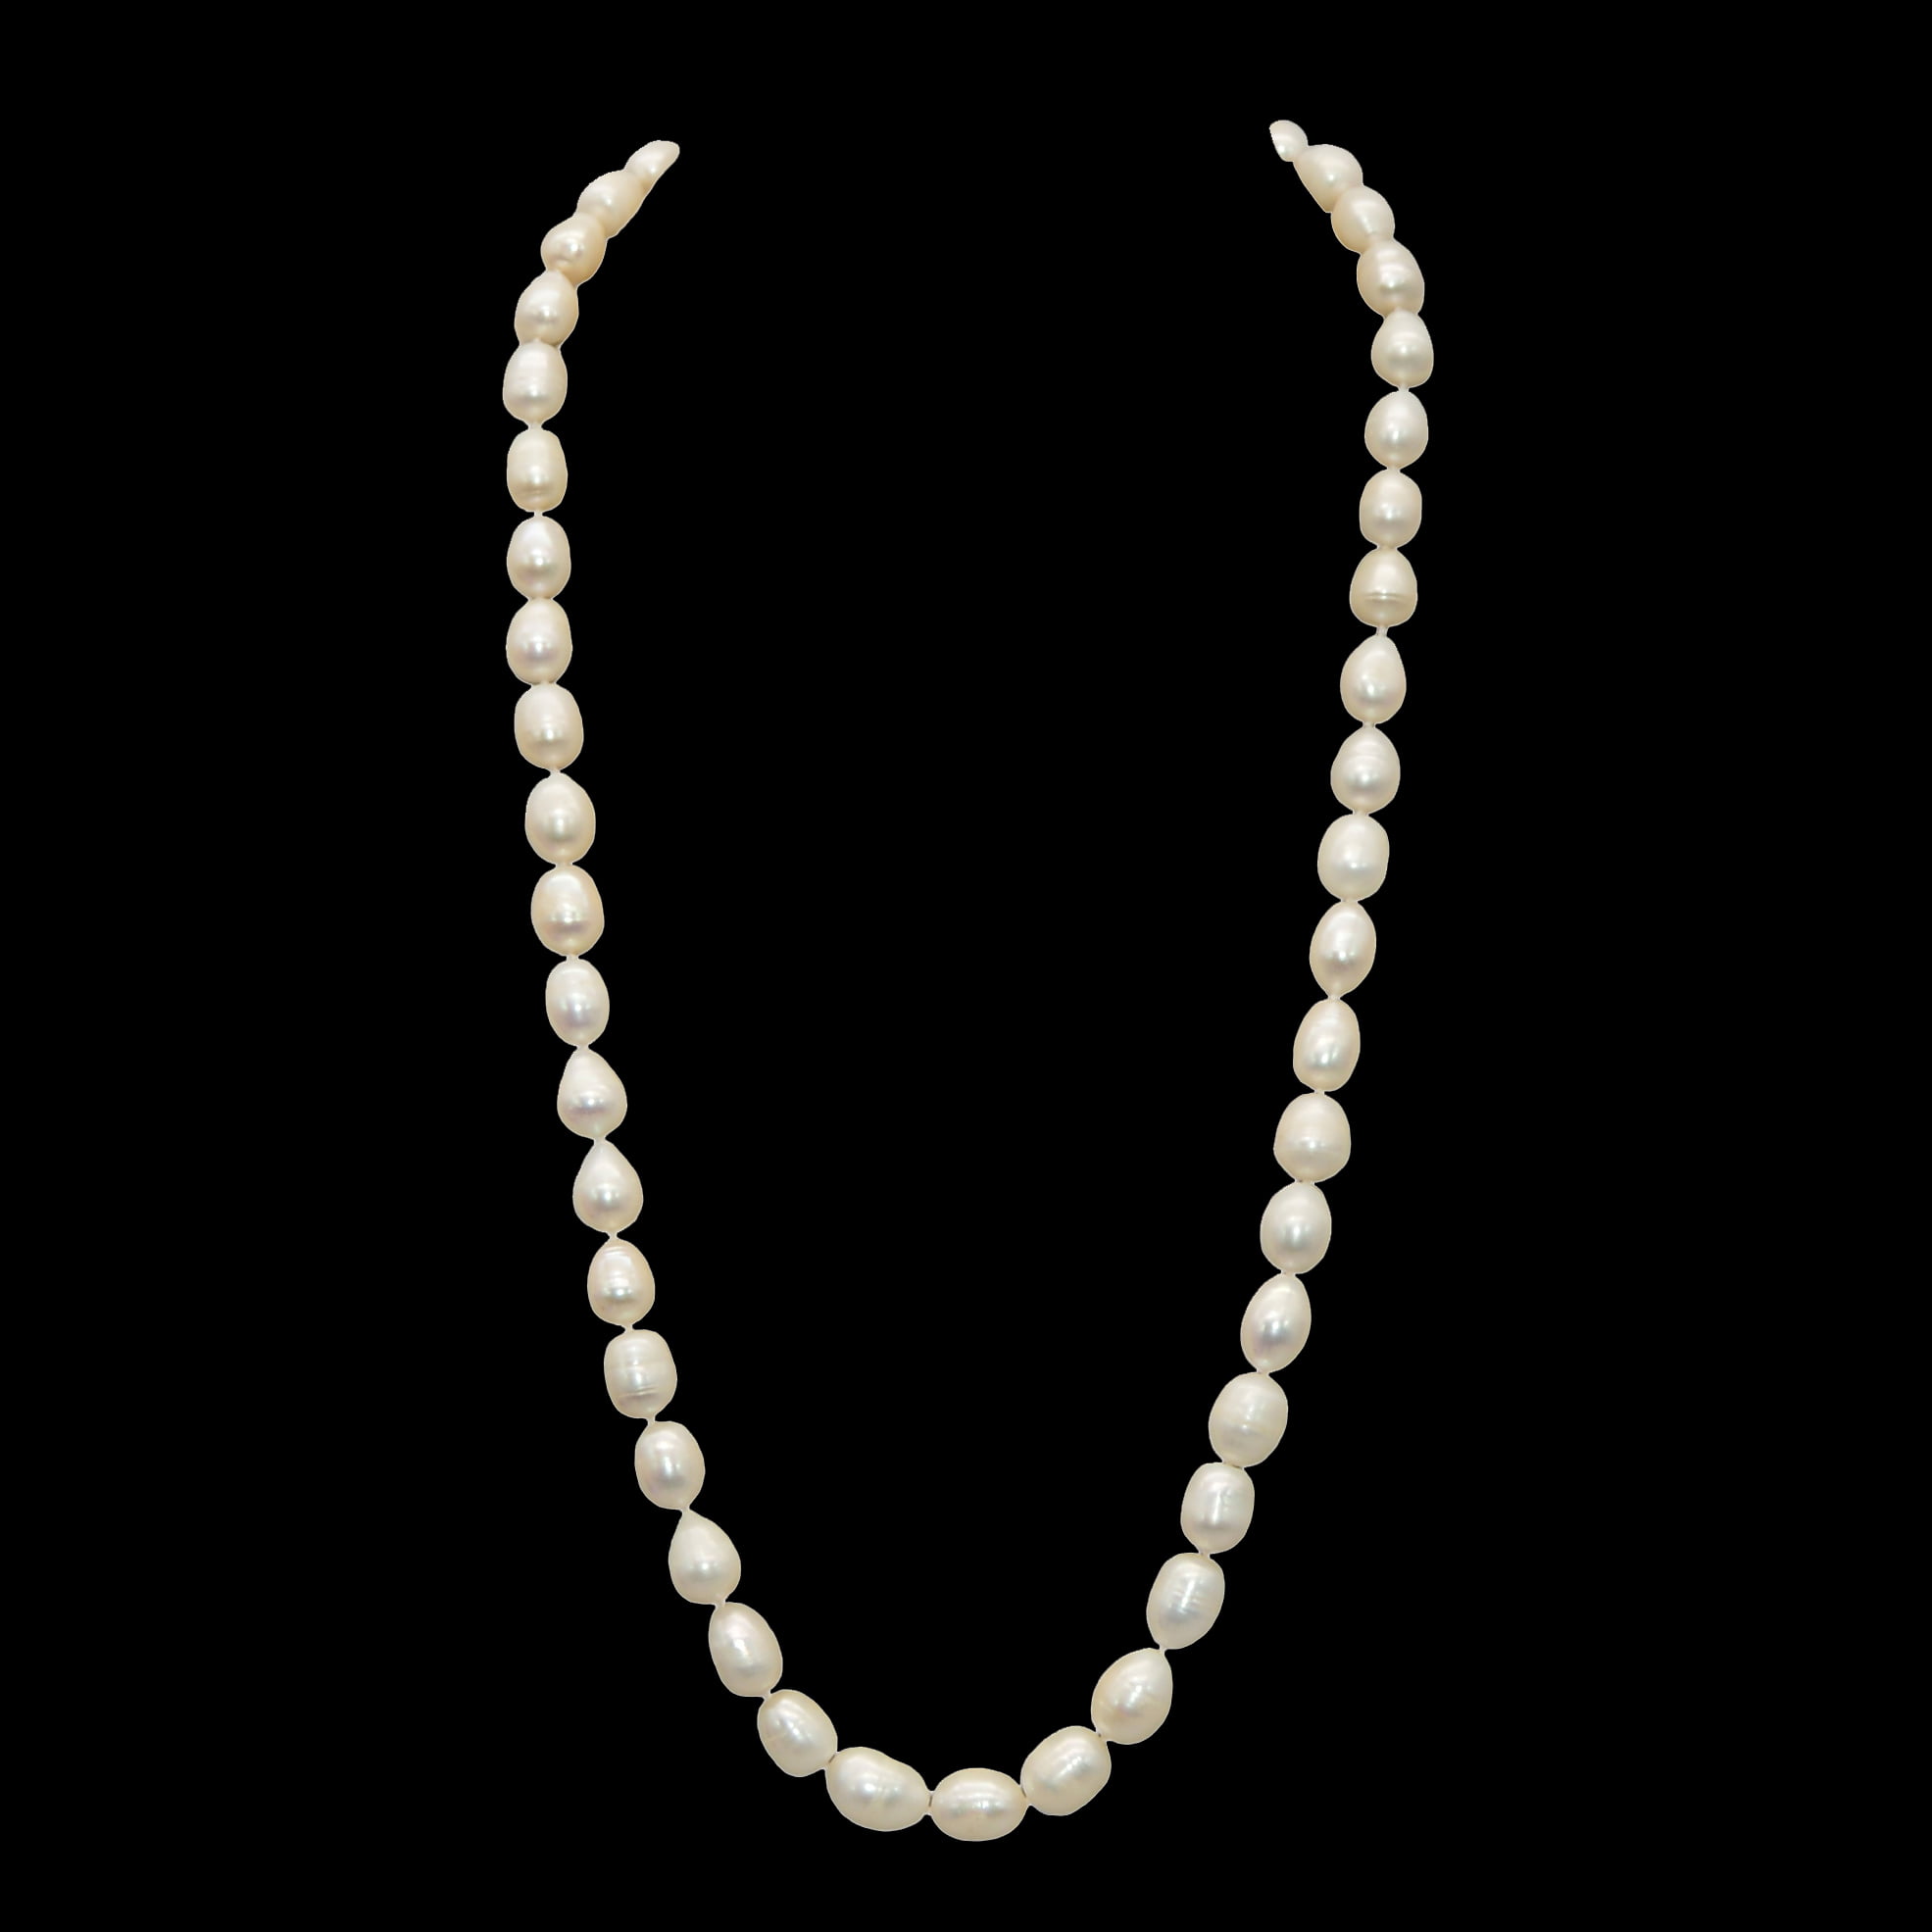 Baroque Pearl Necklace 4 Rows Pearl Necklace, 6-12mm Ivory Freshwater Pearl  Necklace,real Pearl Necklace, Statement Necklace - Etsy | Ivory pearl  necklace, Real pearl necklace, Pearl jewelry design